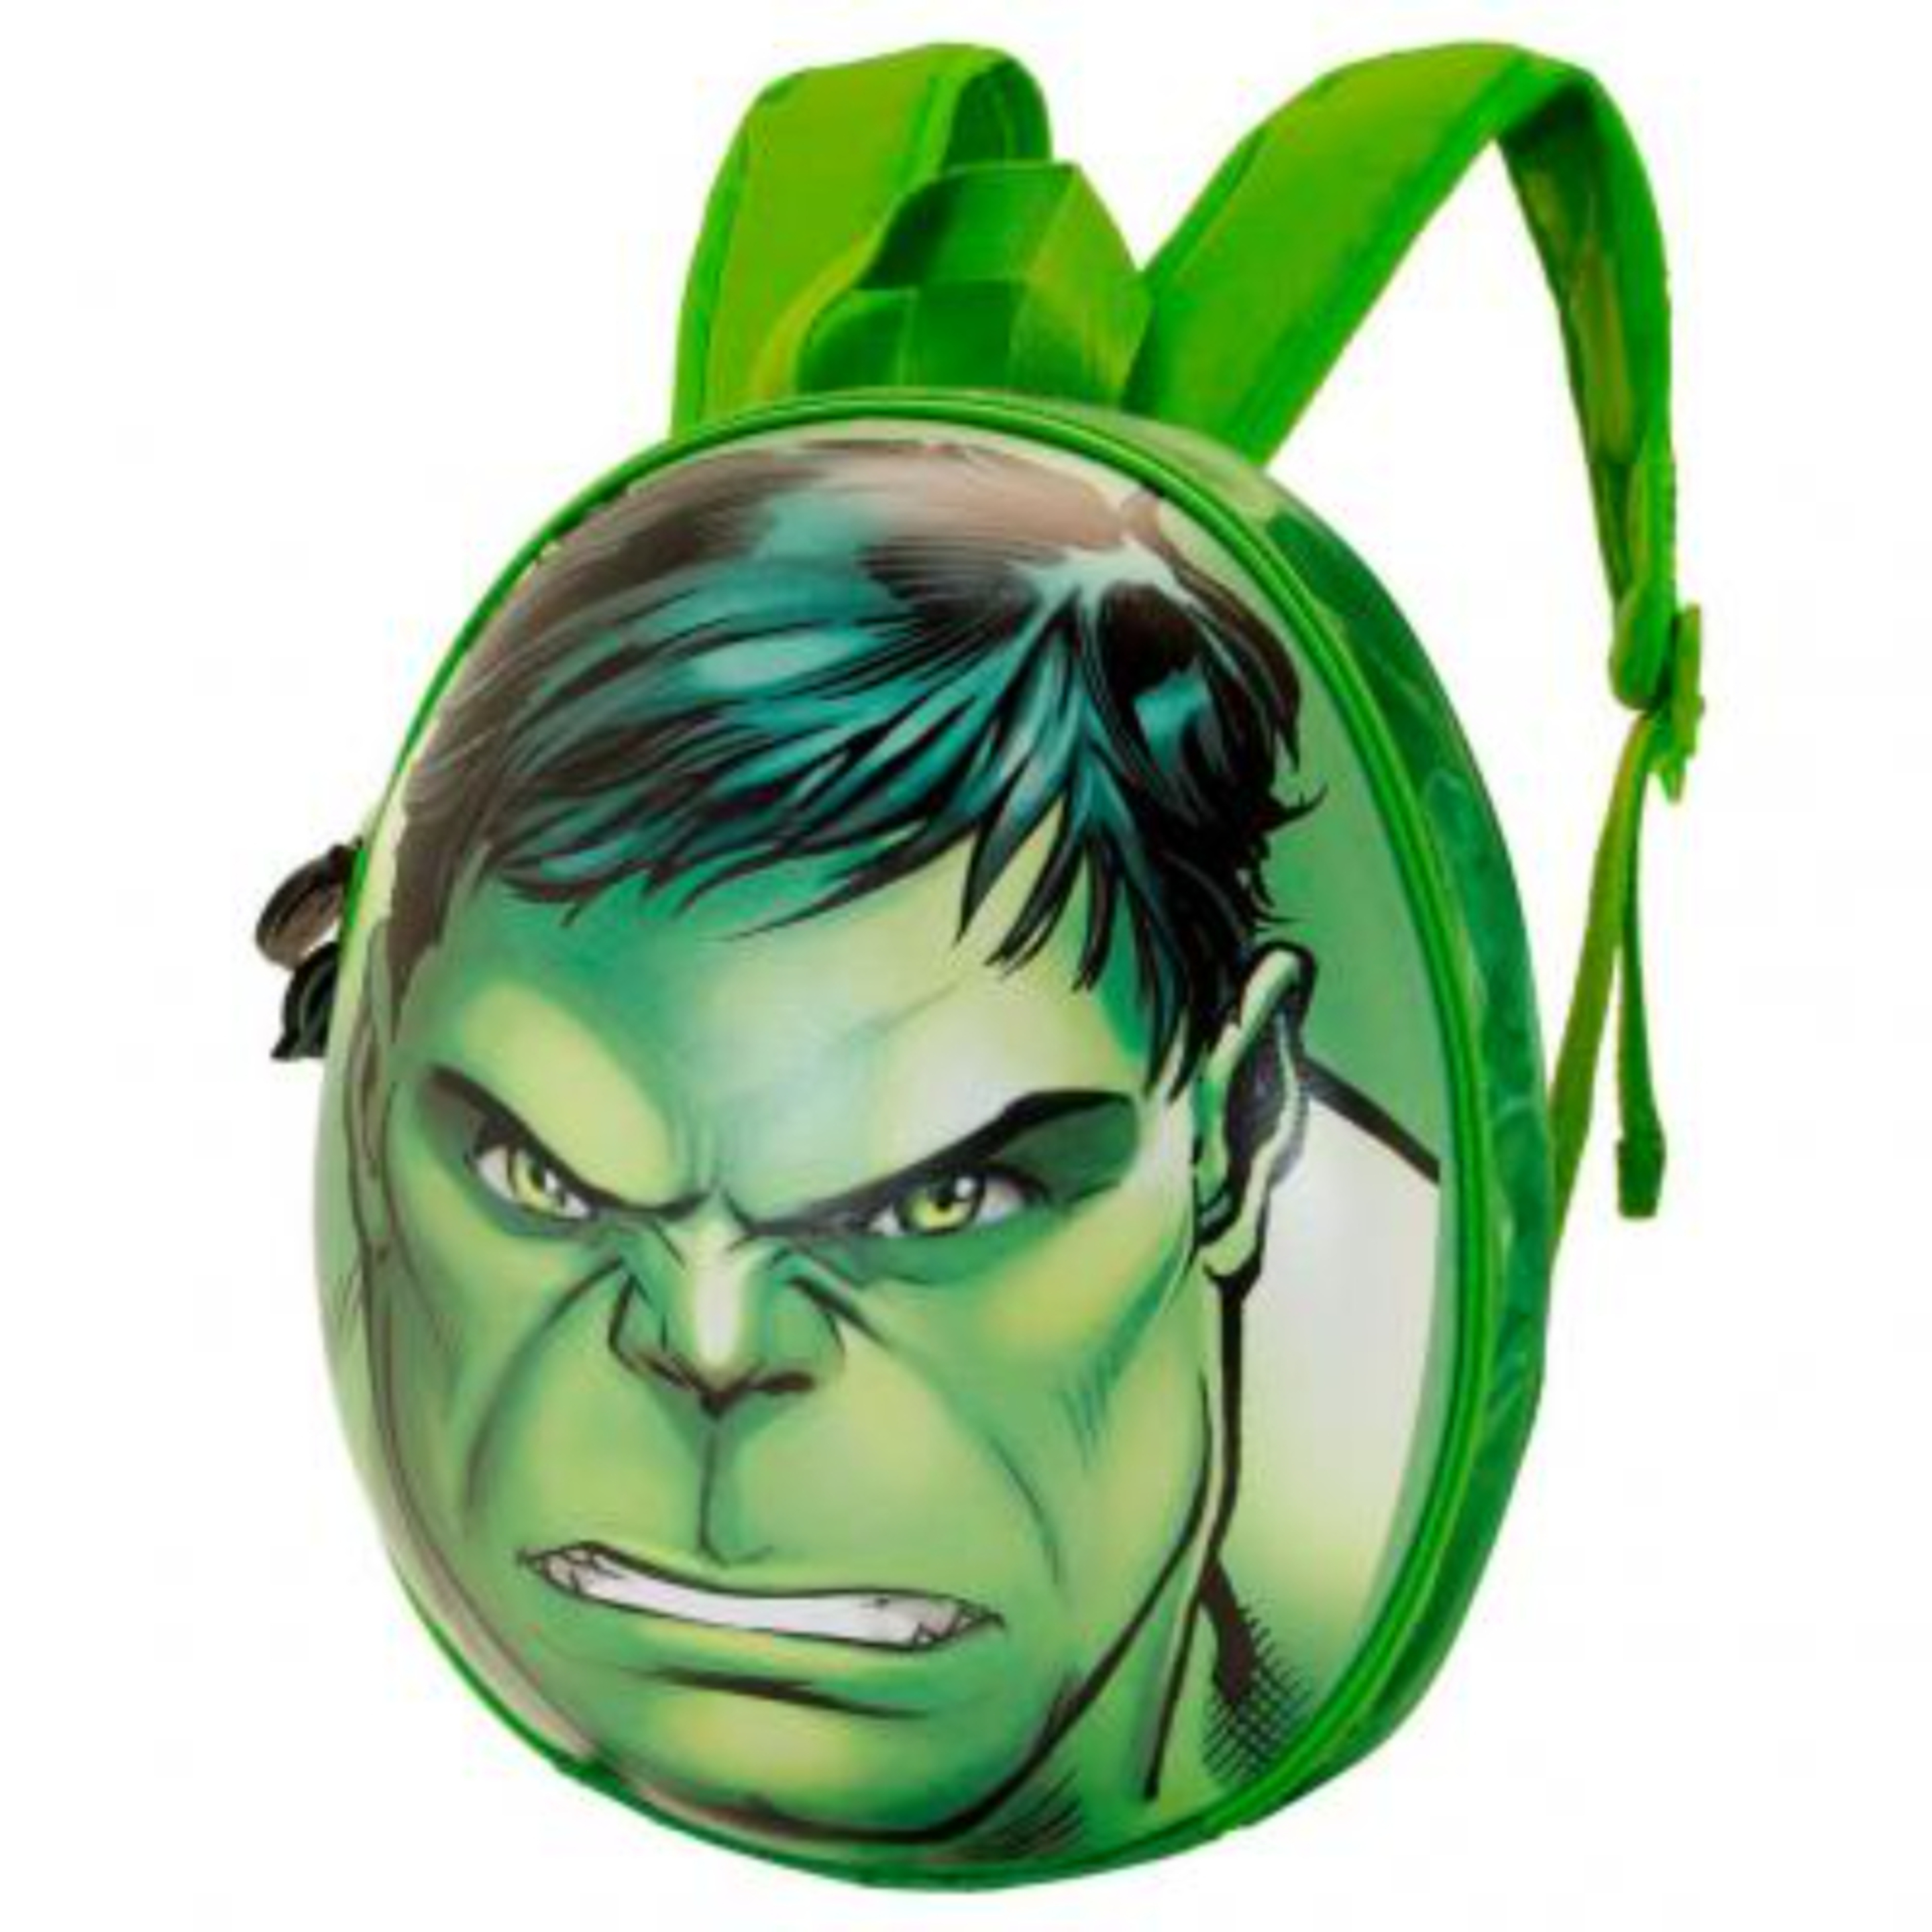 Mochila Hulk 71411 - verde - 